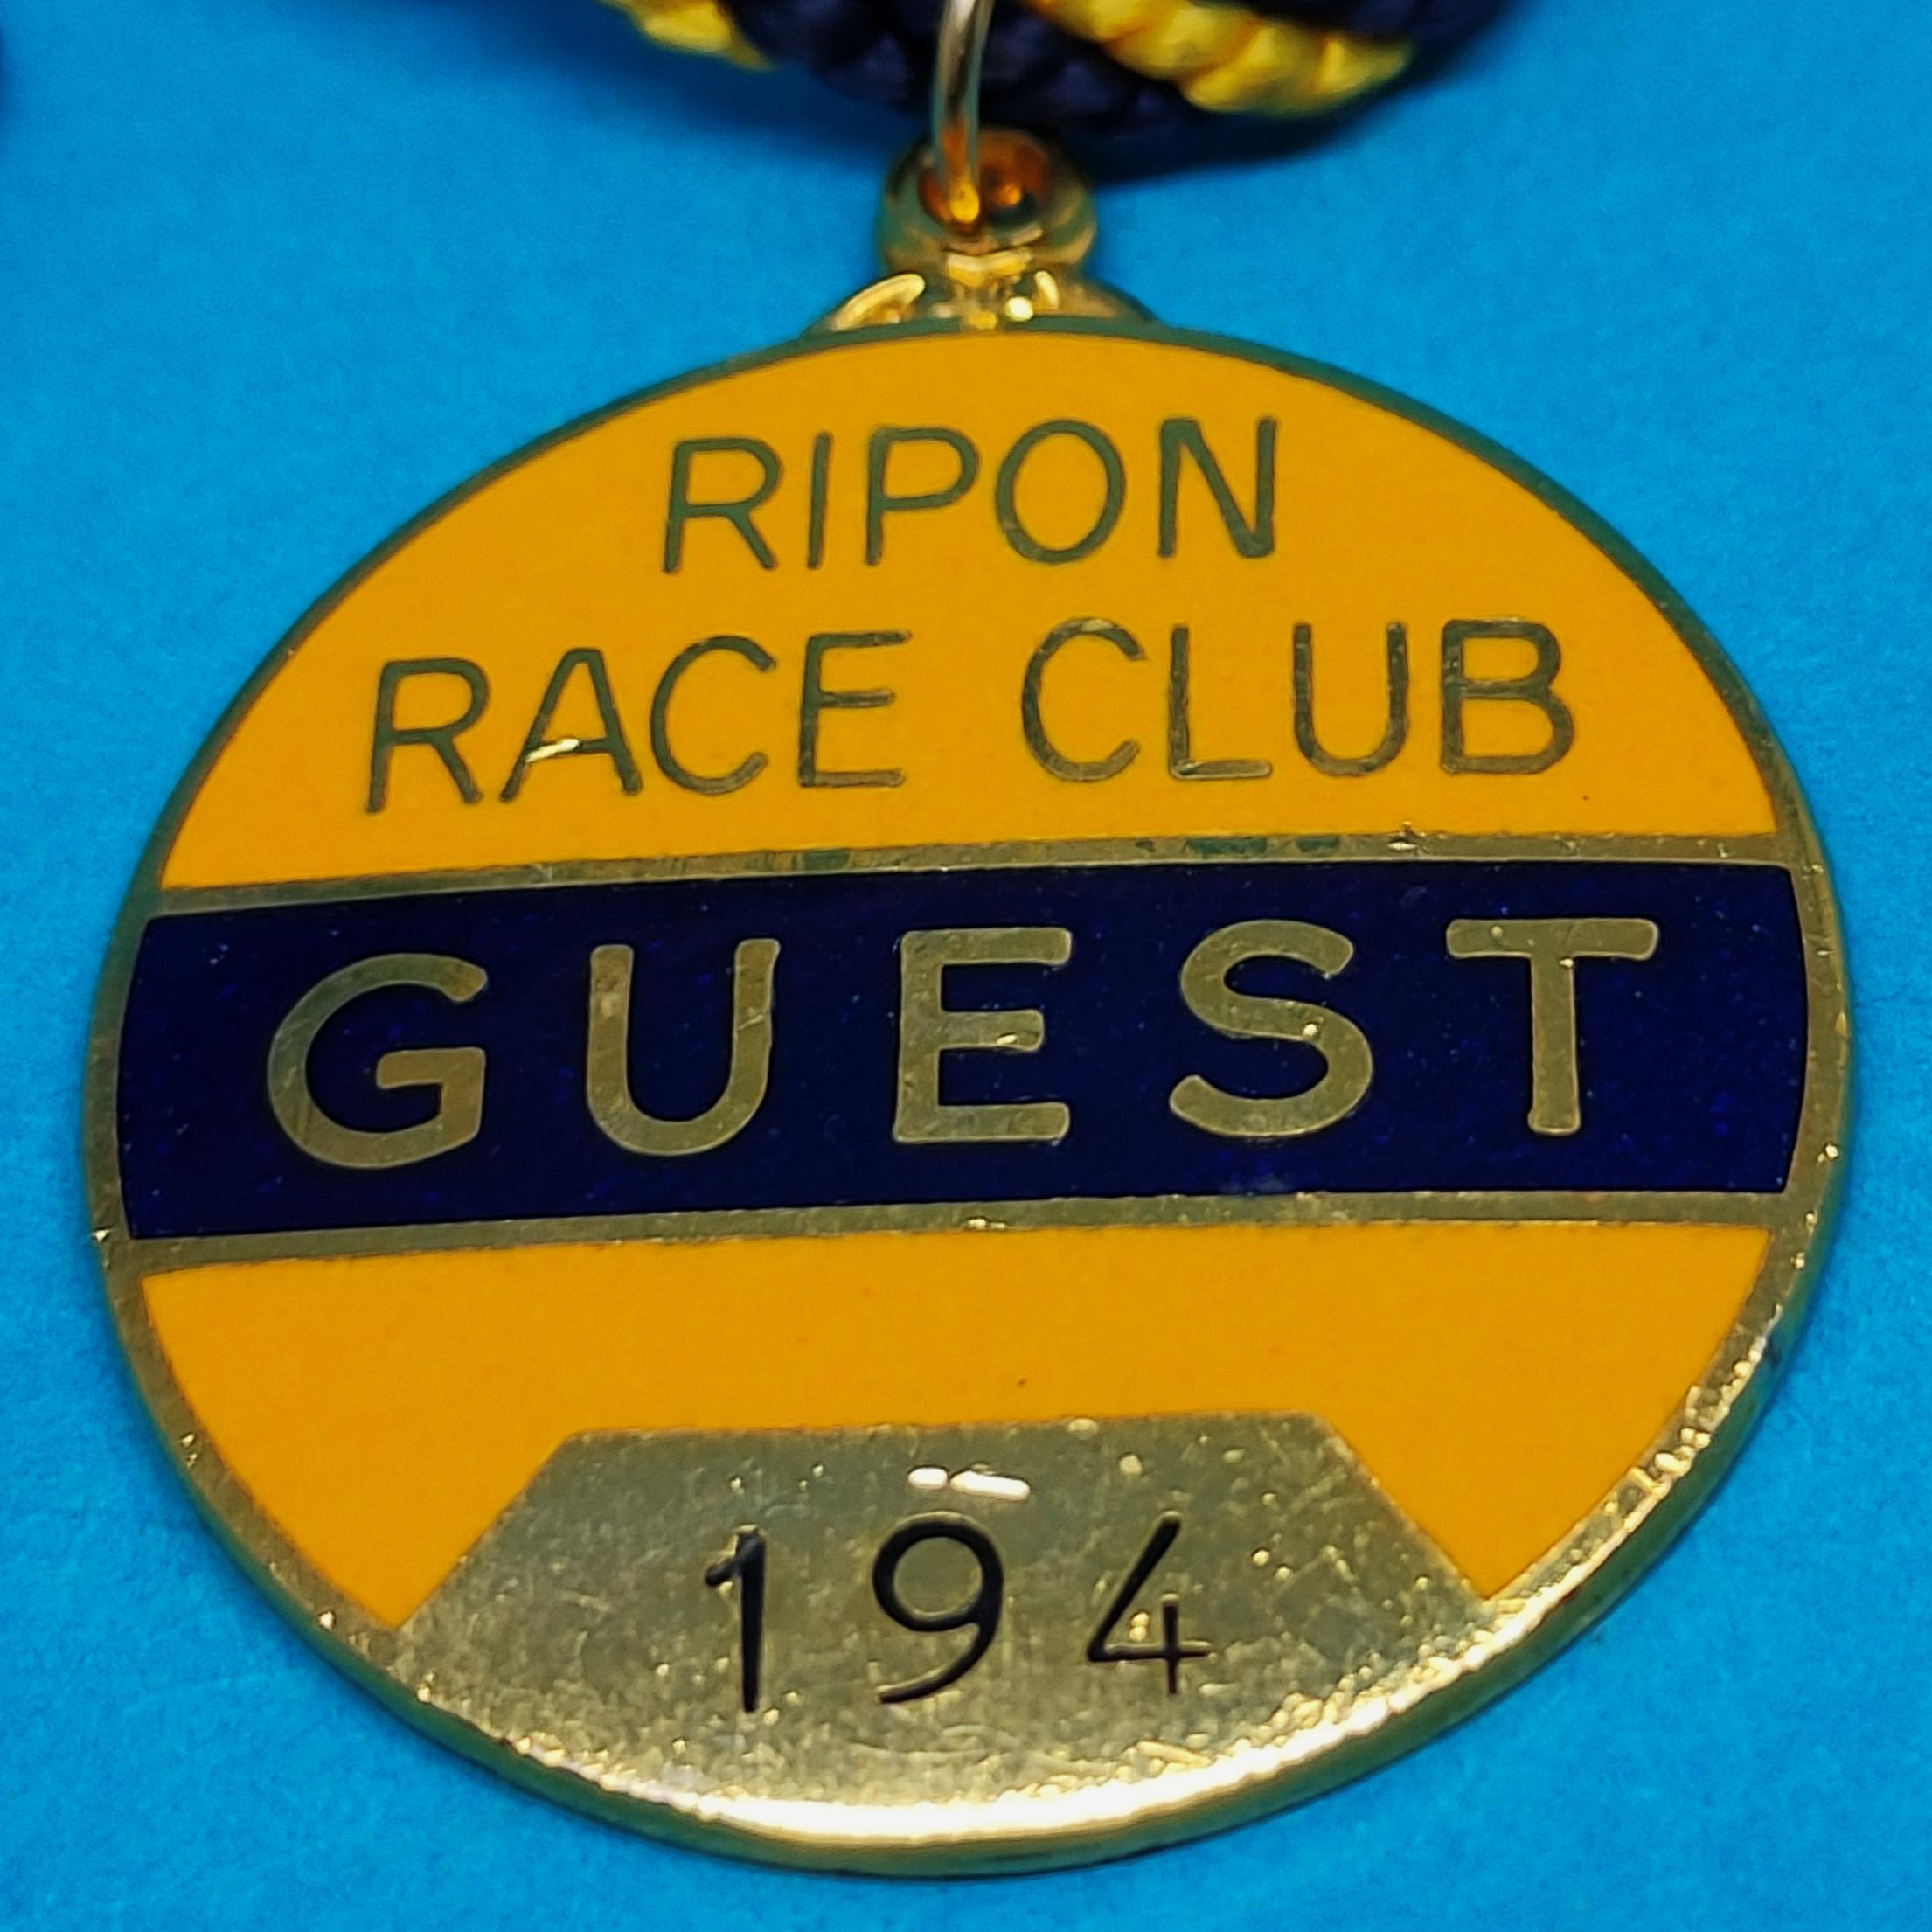 Ripon Guest 1998